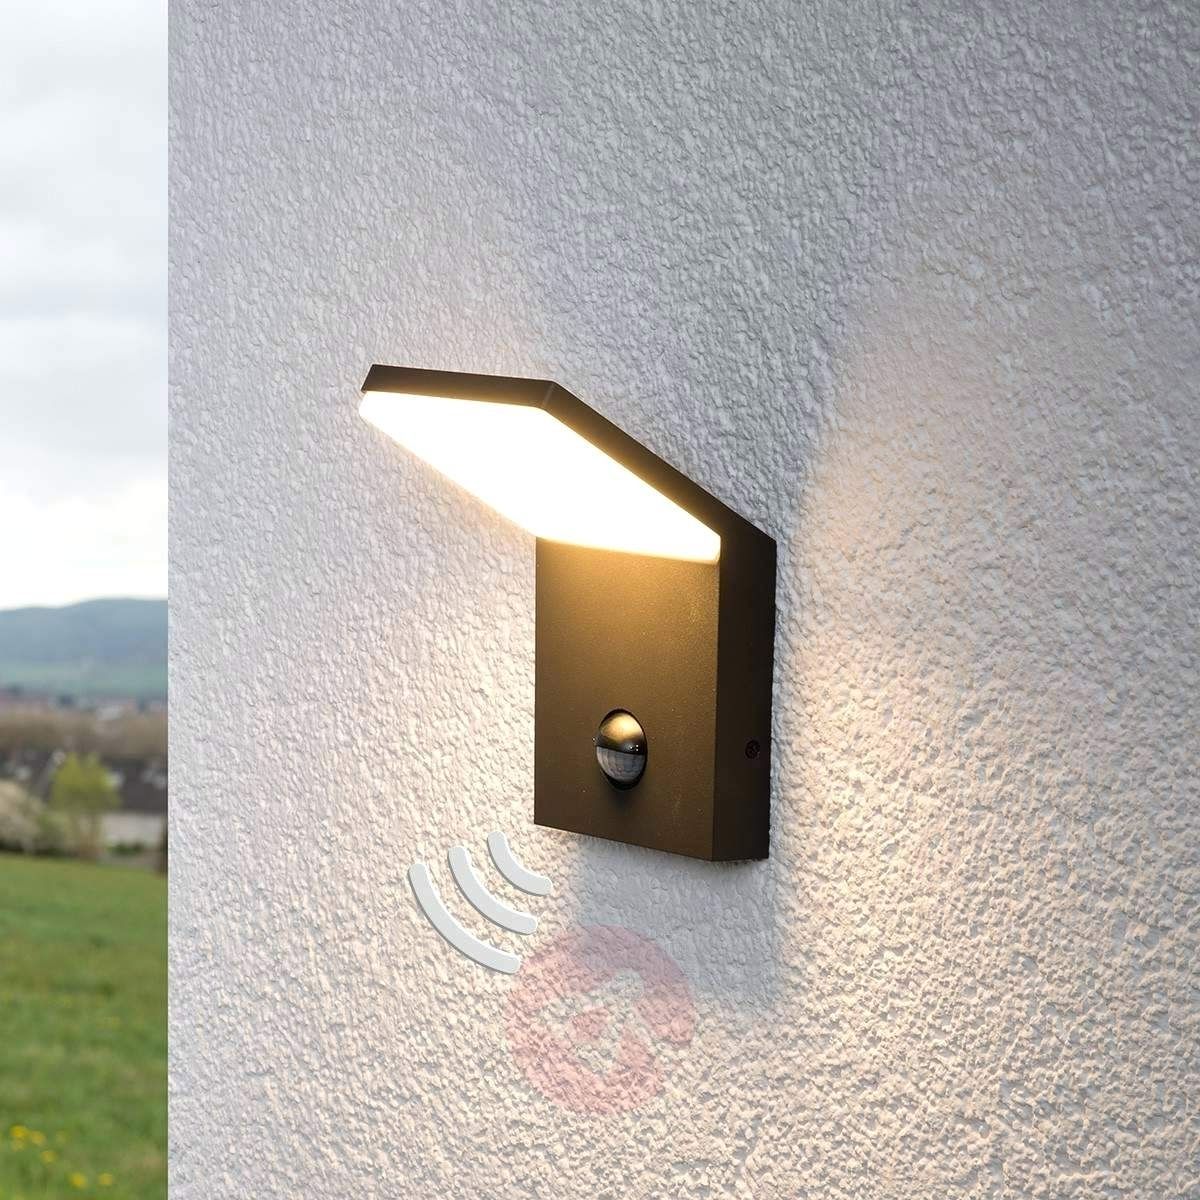 Fashionable Led Outdoor Wall Lights Lanea With Motion Sensor Inside Light : Led Wall Mount Light. Wall Mounted Adjustable Light (View 17 of 20)